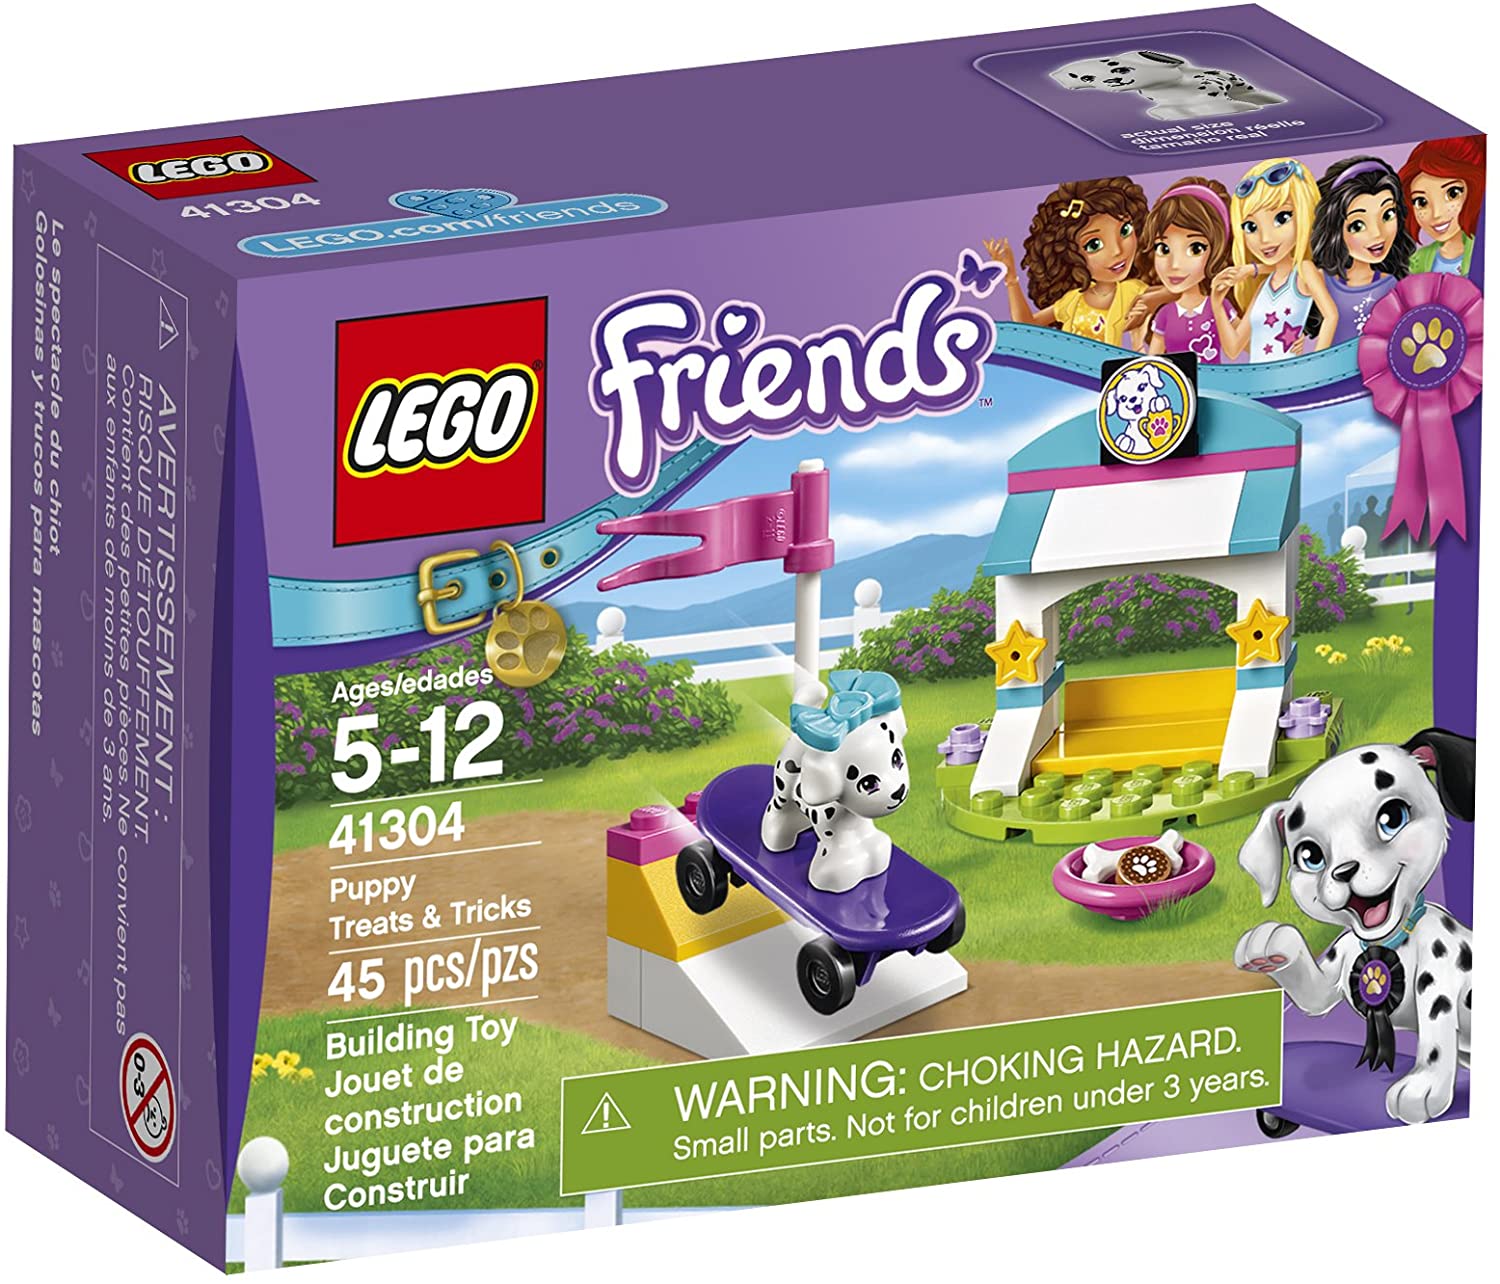 【折300+10%回饋】LEGO Friends Puppy Treats & Tricks 41304 Building Kit